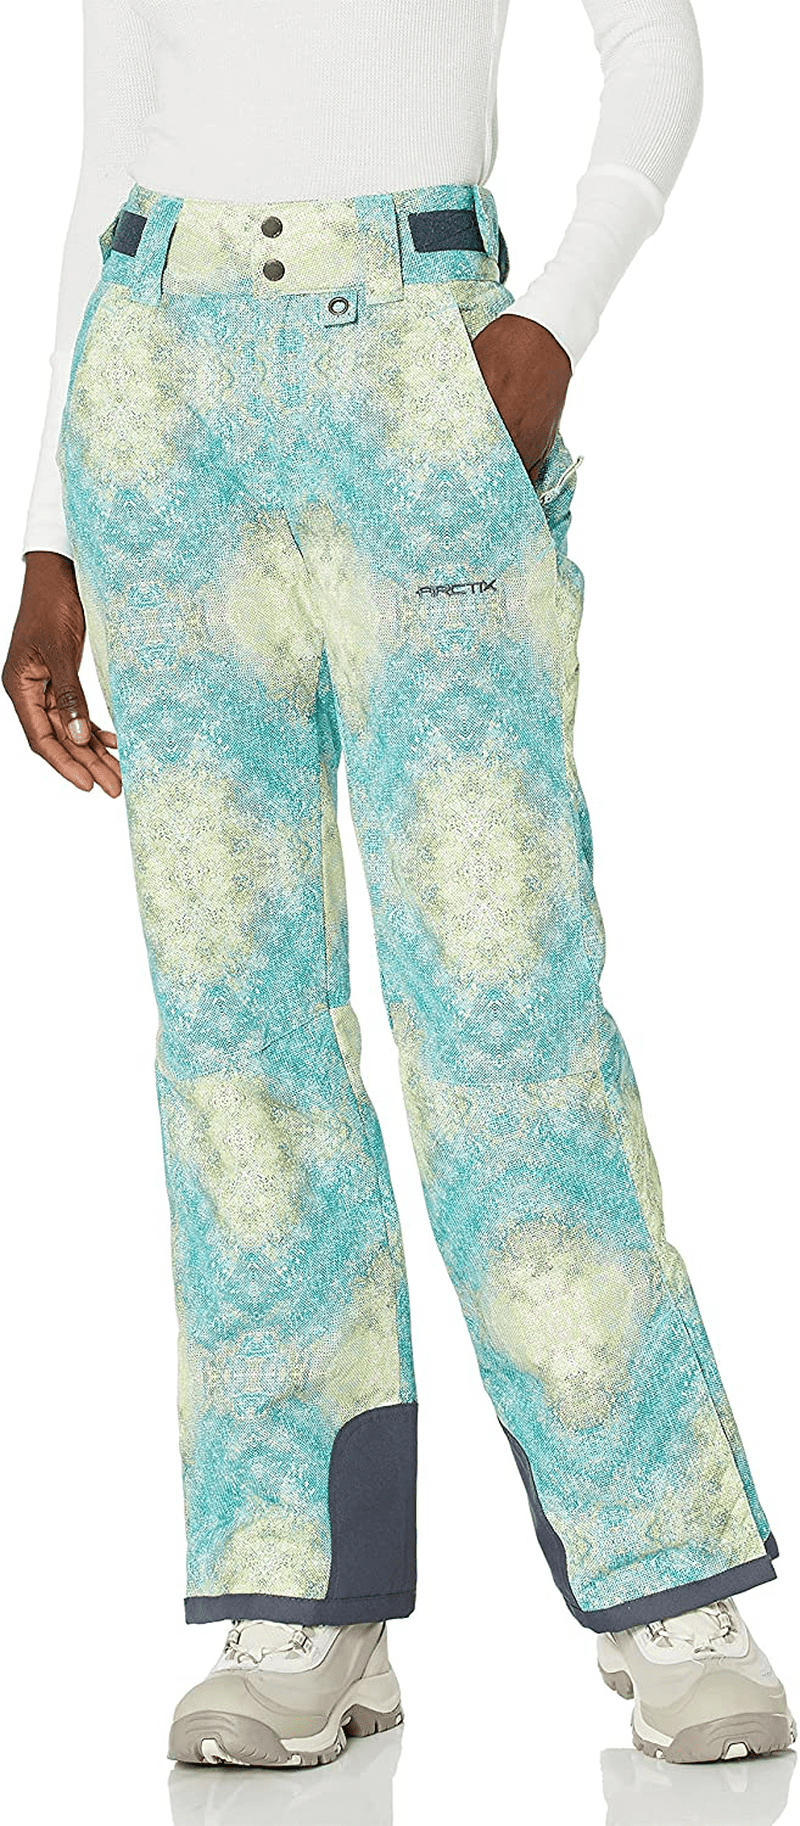 Arctix Women's Insulated Snow Pants Apparel & Accessories > Clothing > Outerwear > Snow Pants & Suits Arctix Ombre Teal Medium 